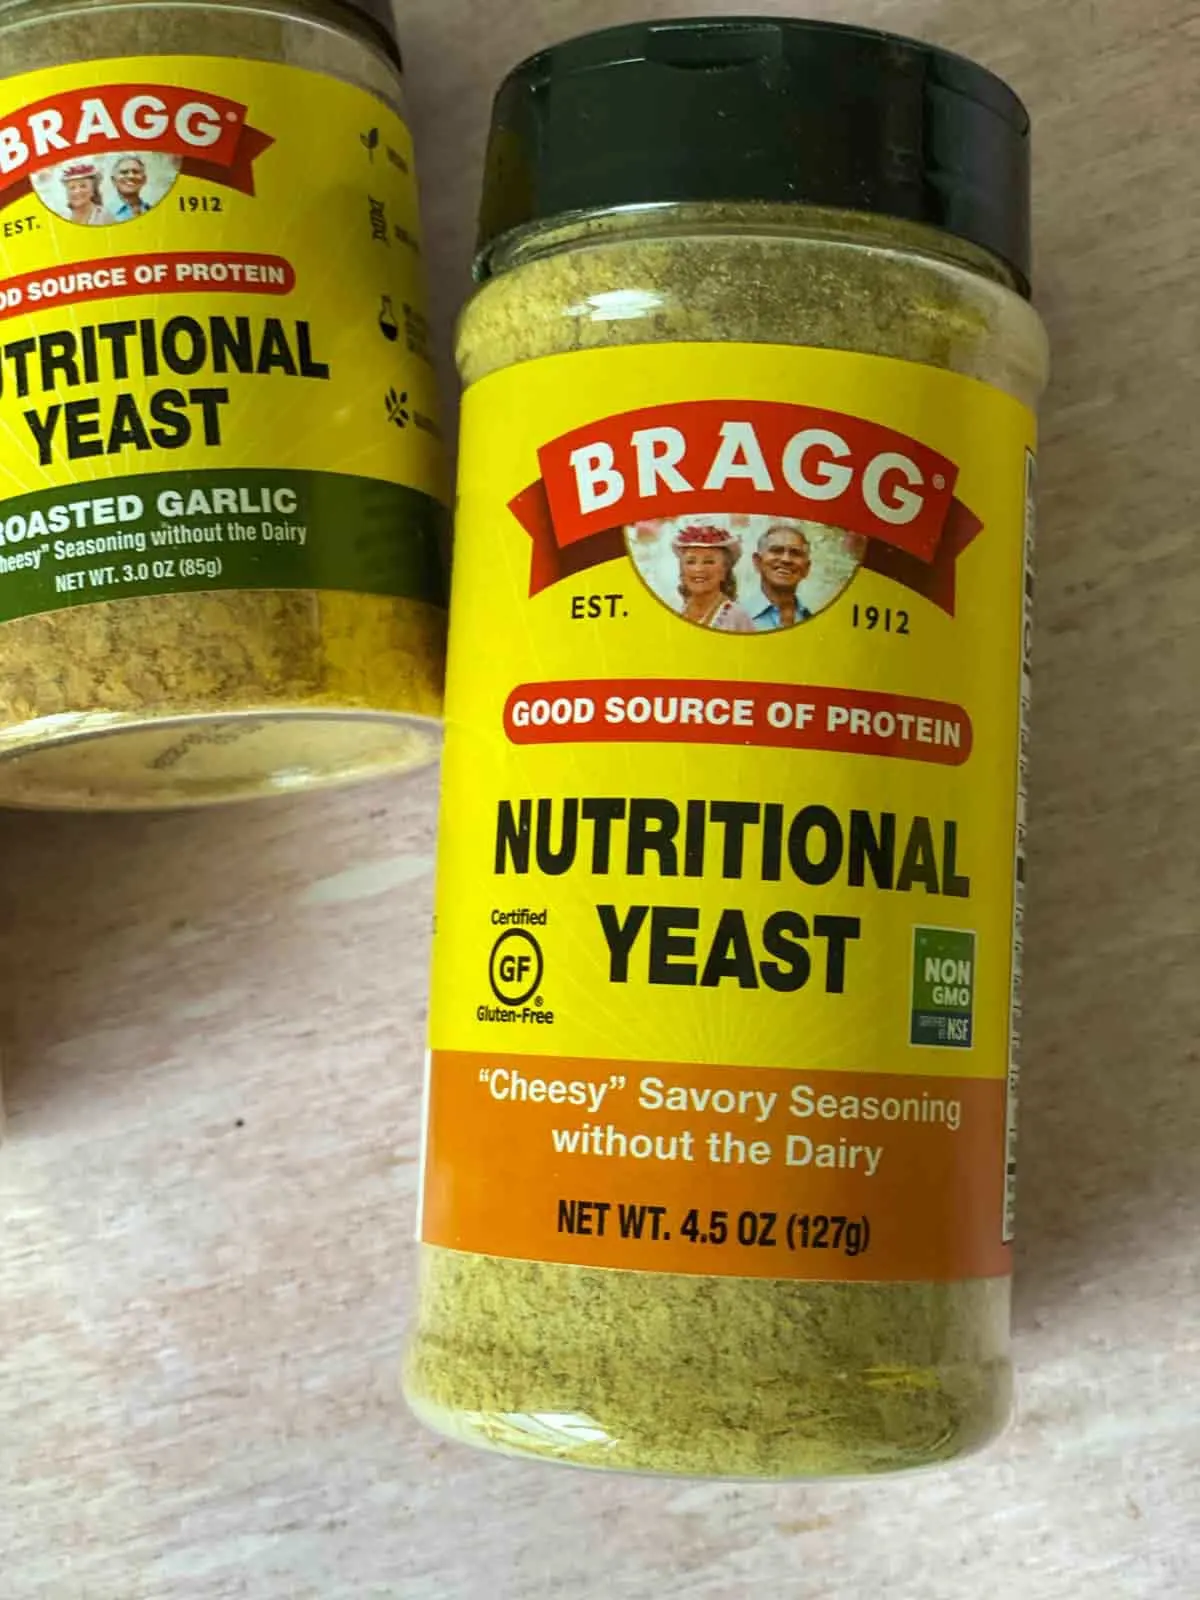 Large jar of Bragg Nutritional yeast